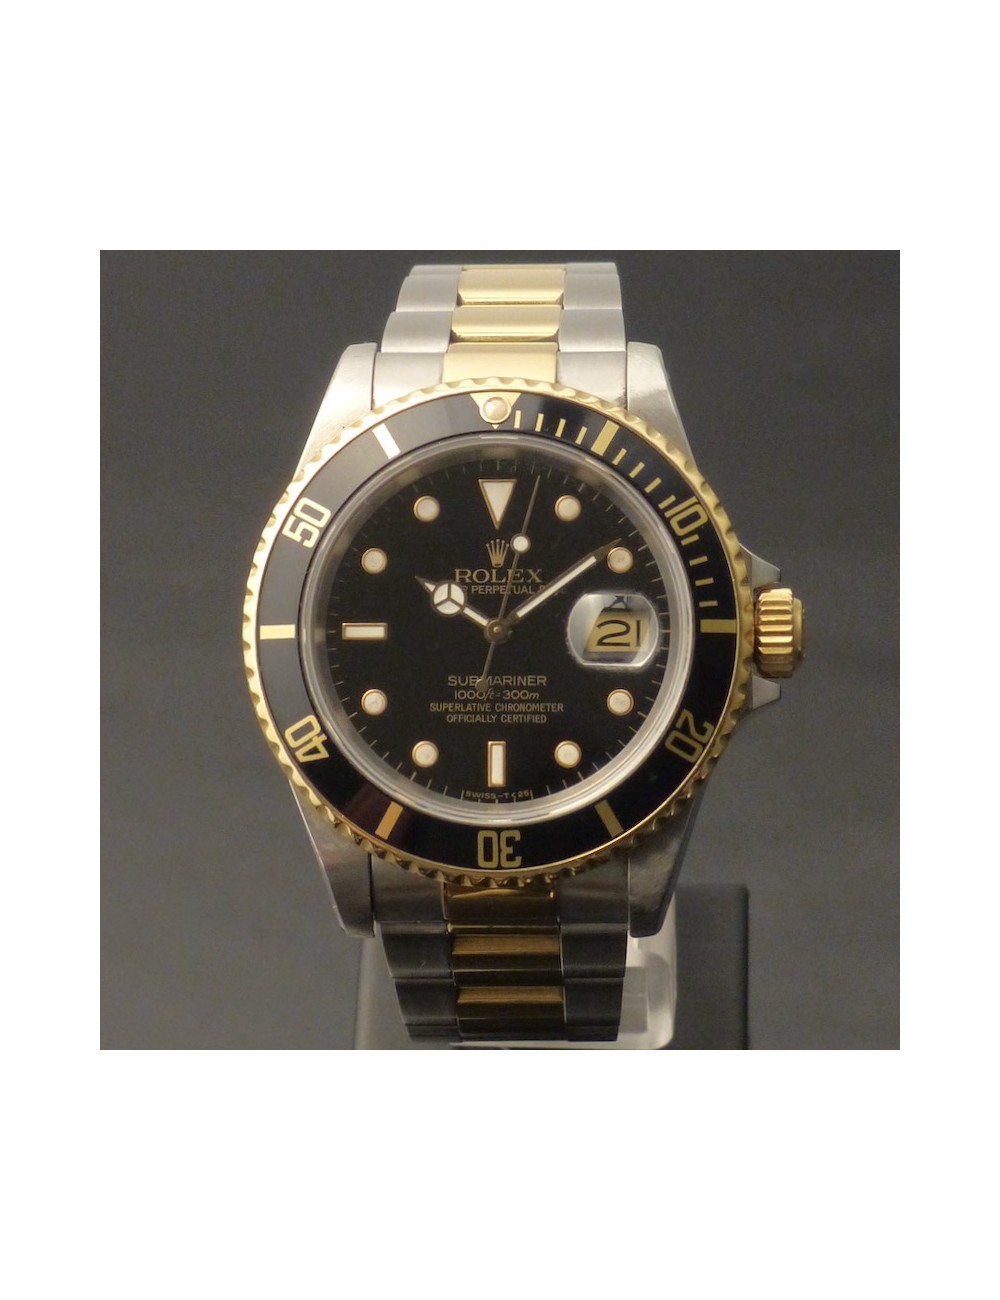 Rolex Submariner acciaio e oro anno 1989